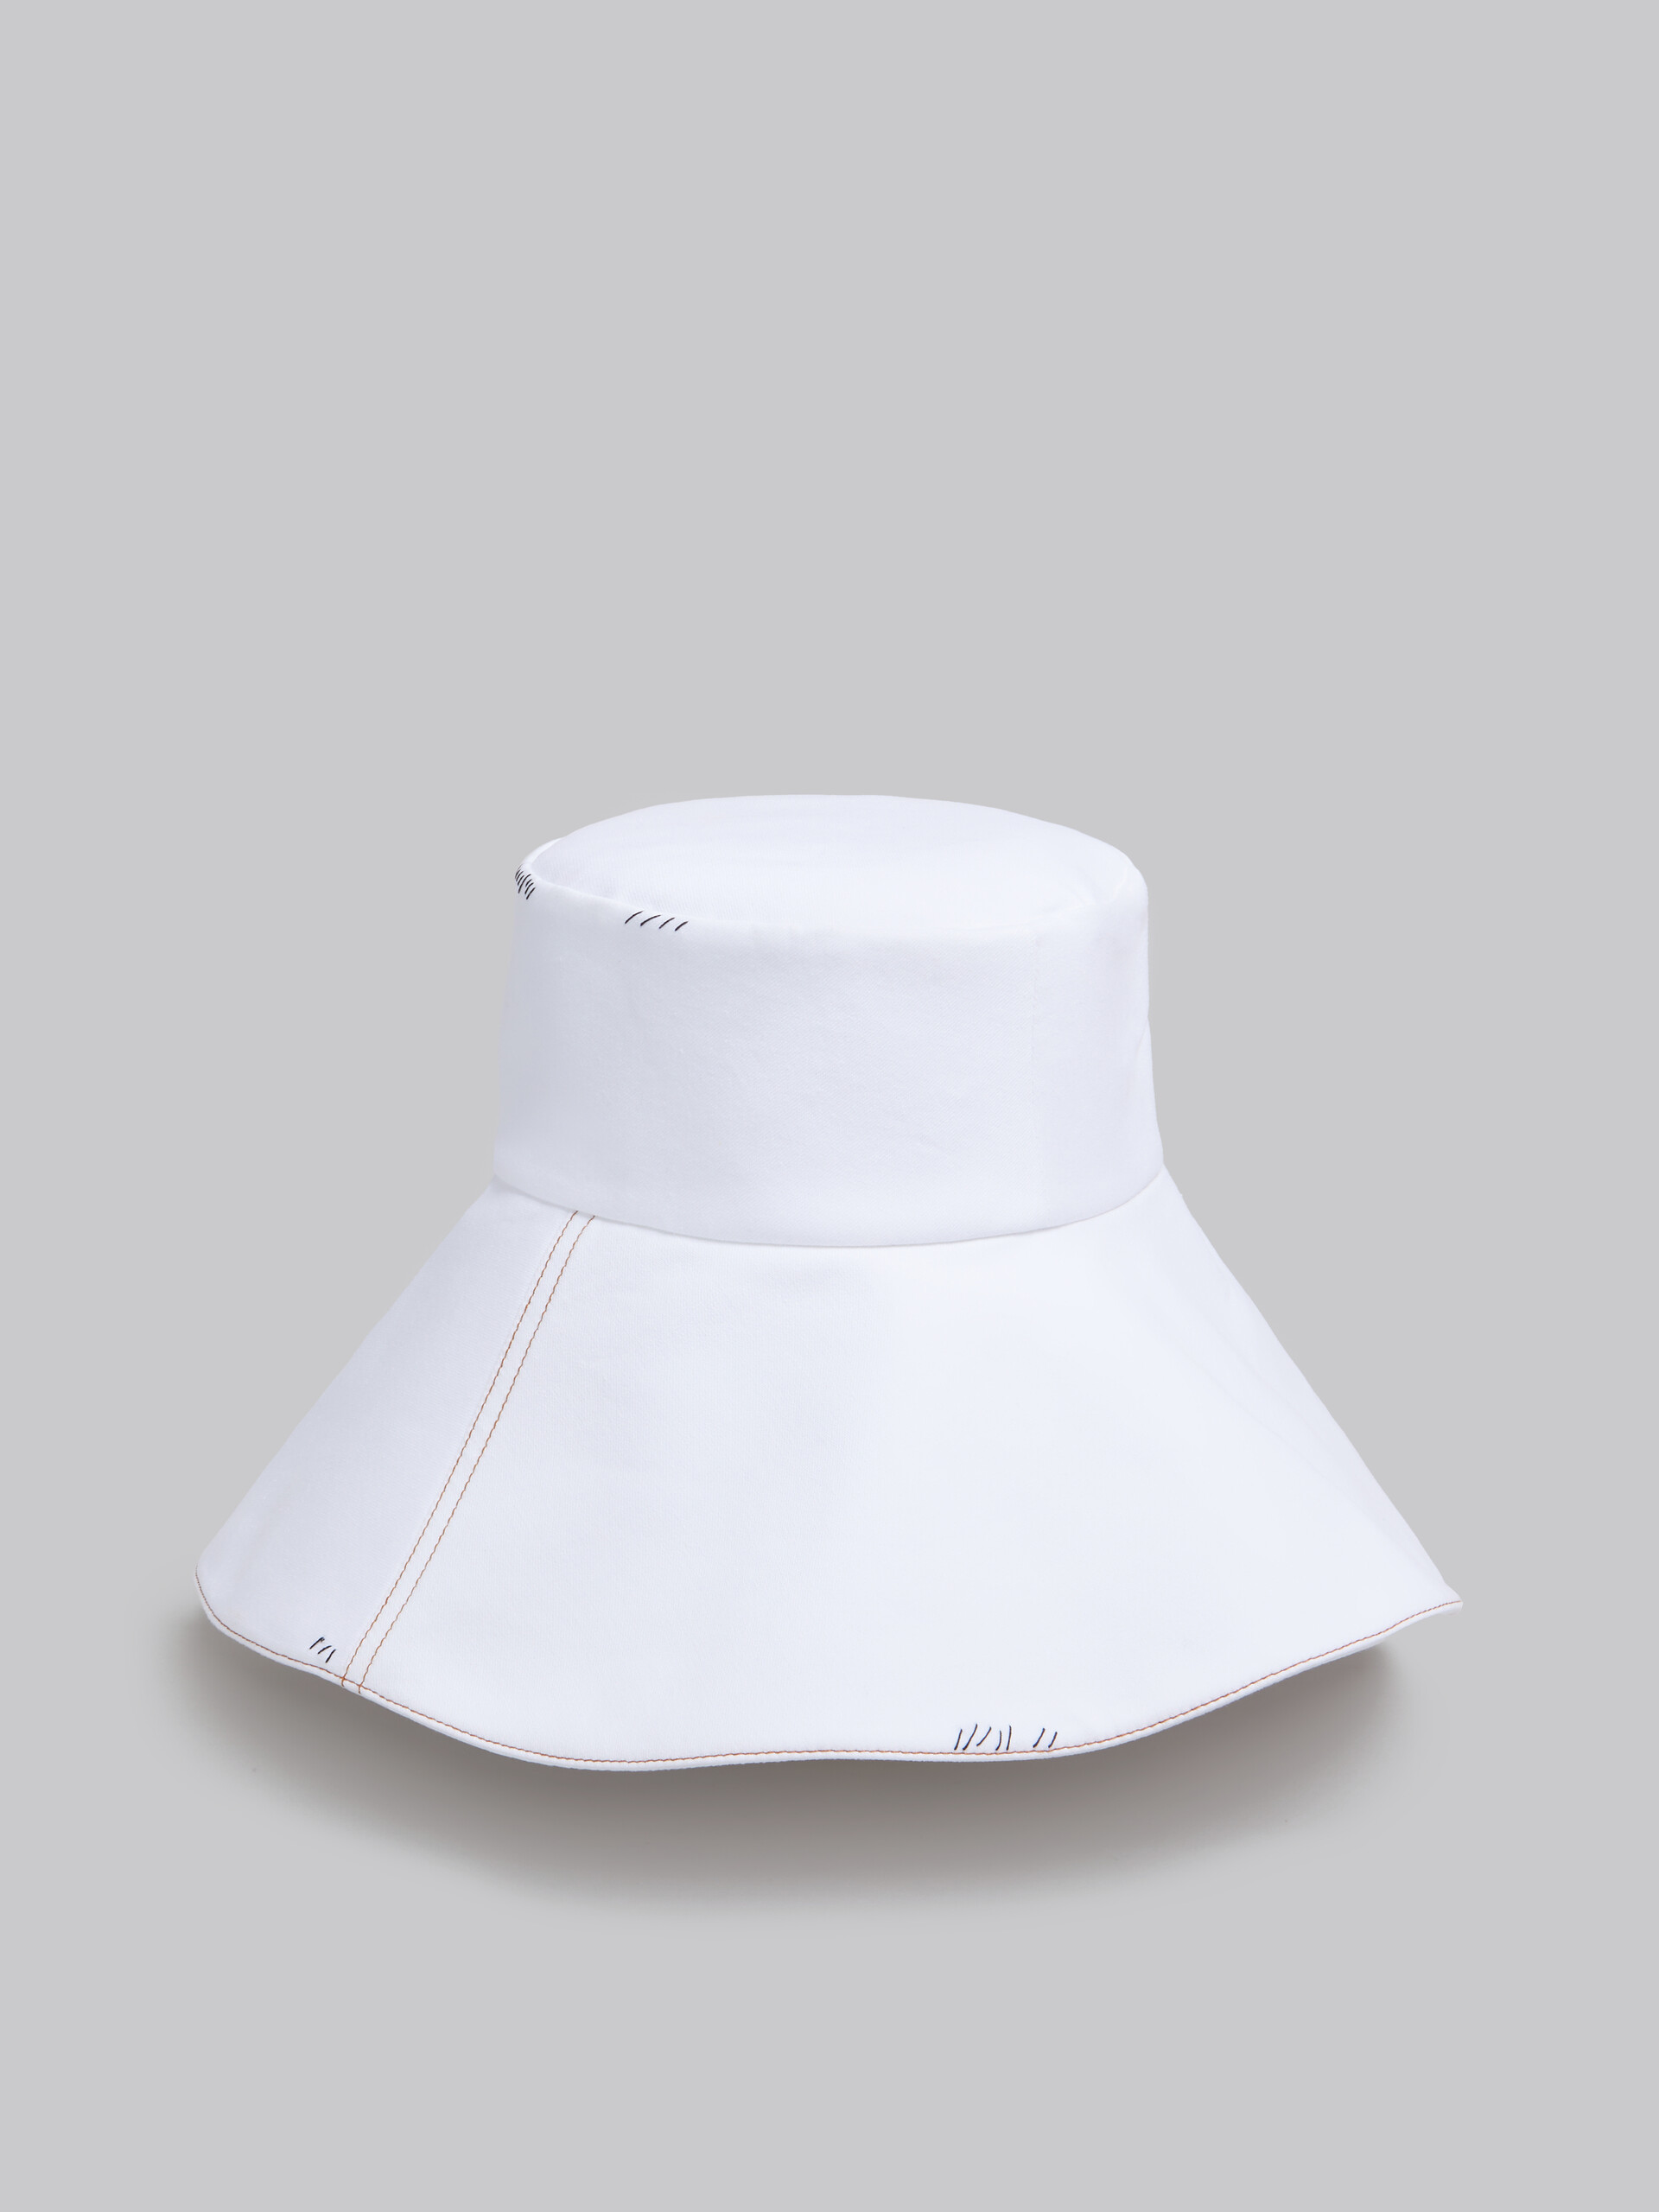 Cappello bucket in denim blu con impunture Marni - Cappelli - Image 3